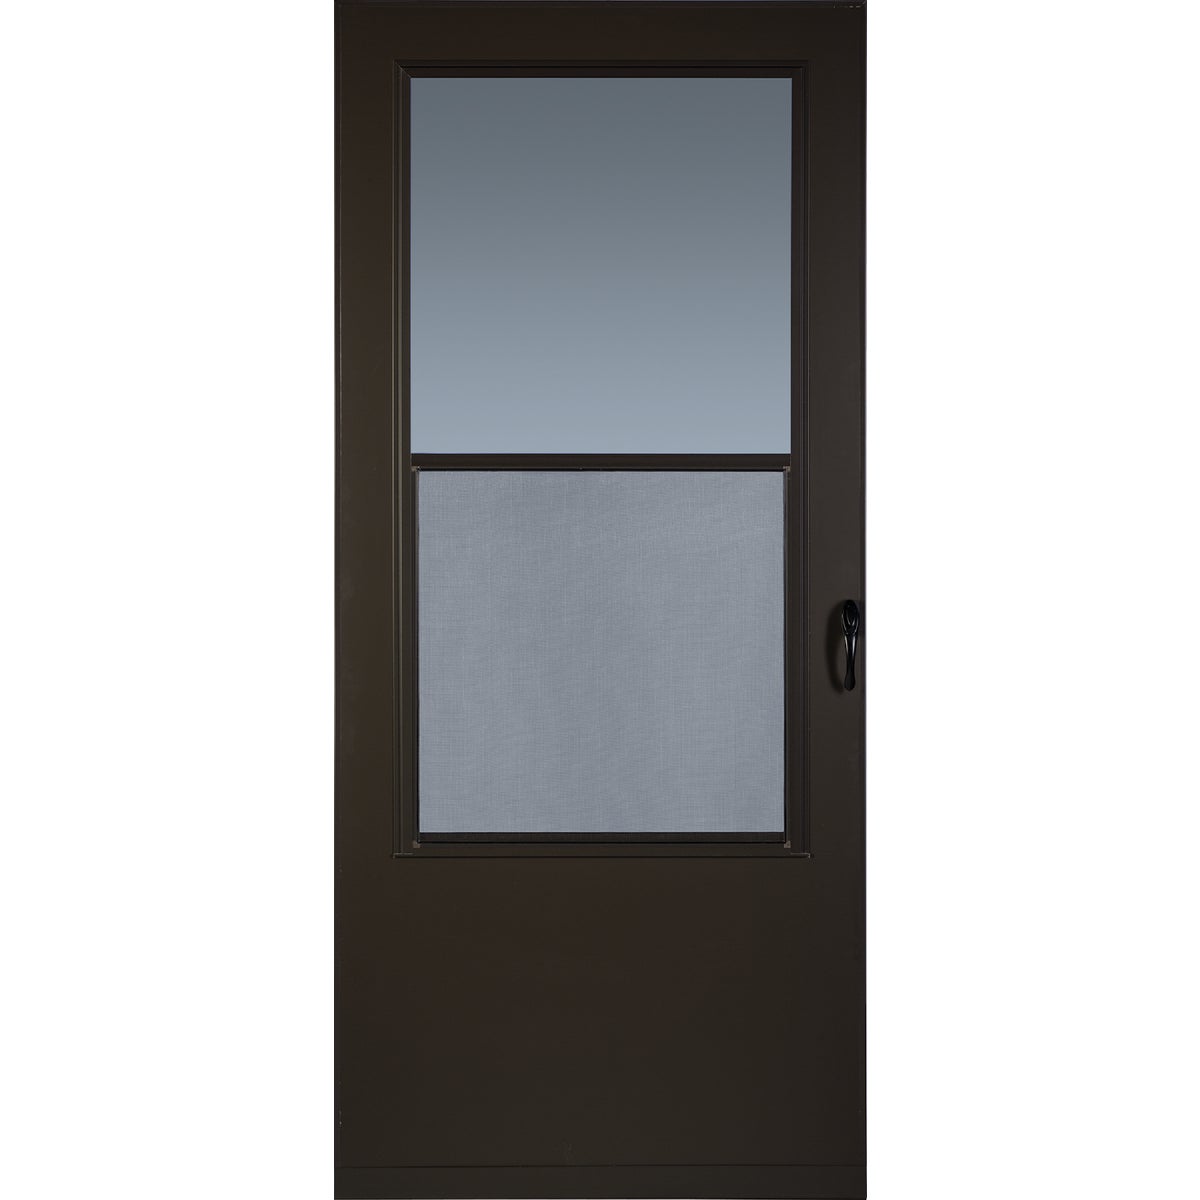 Item 179094, 1-inch reversible, maintenance-free, aluminum clad storm door with solid 